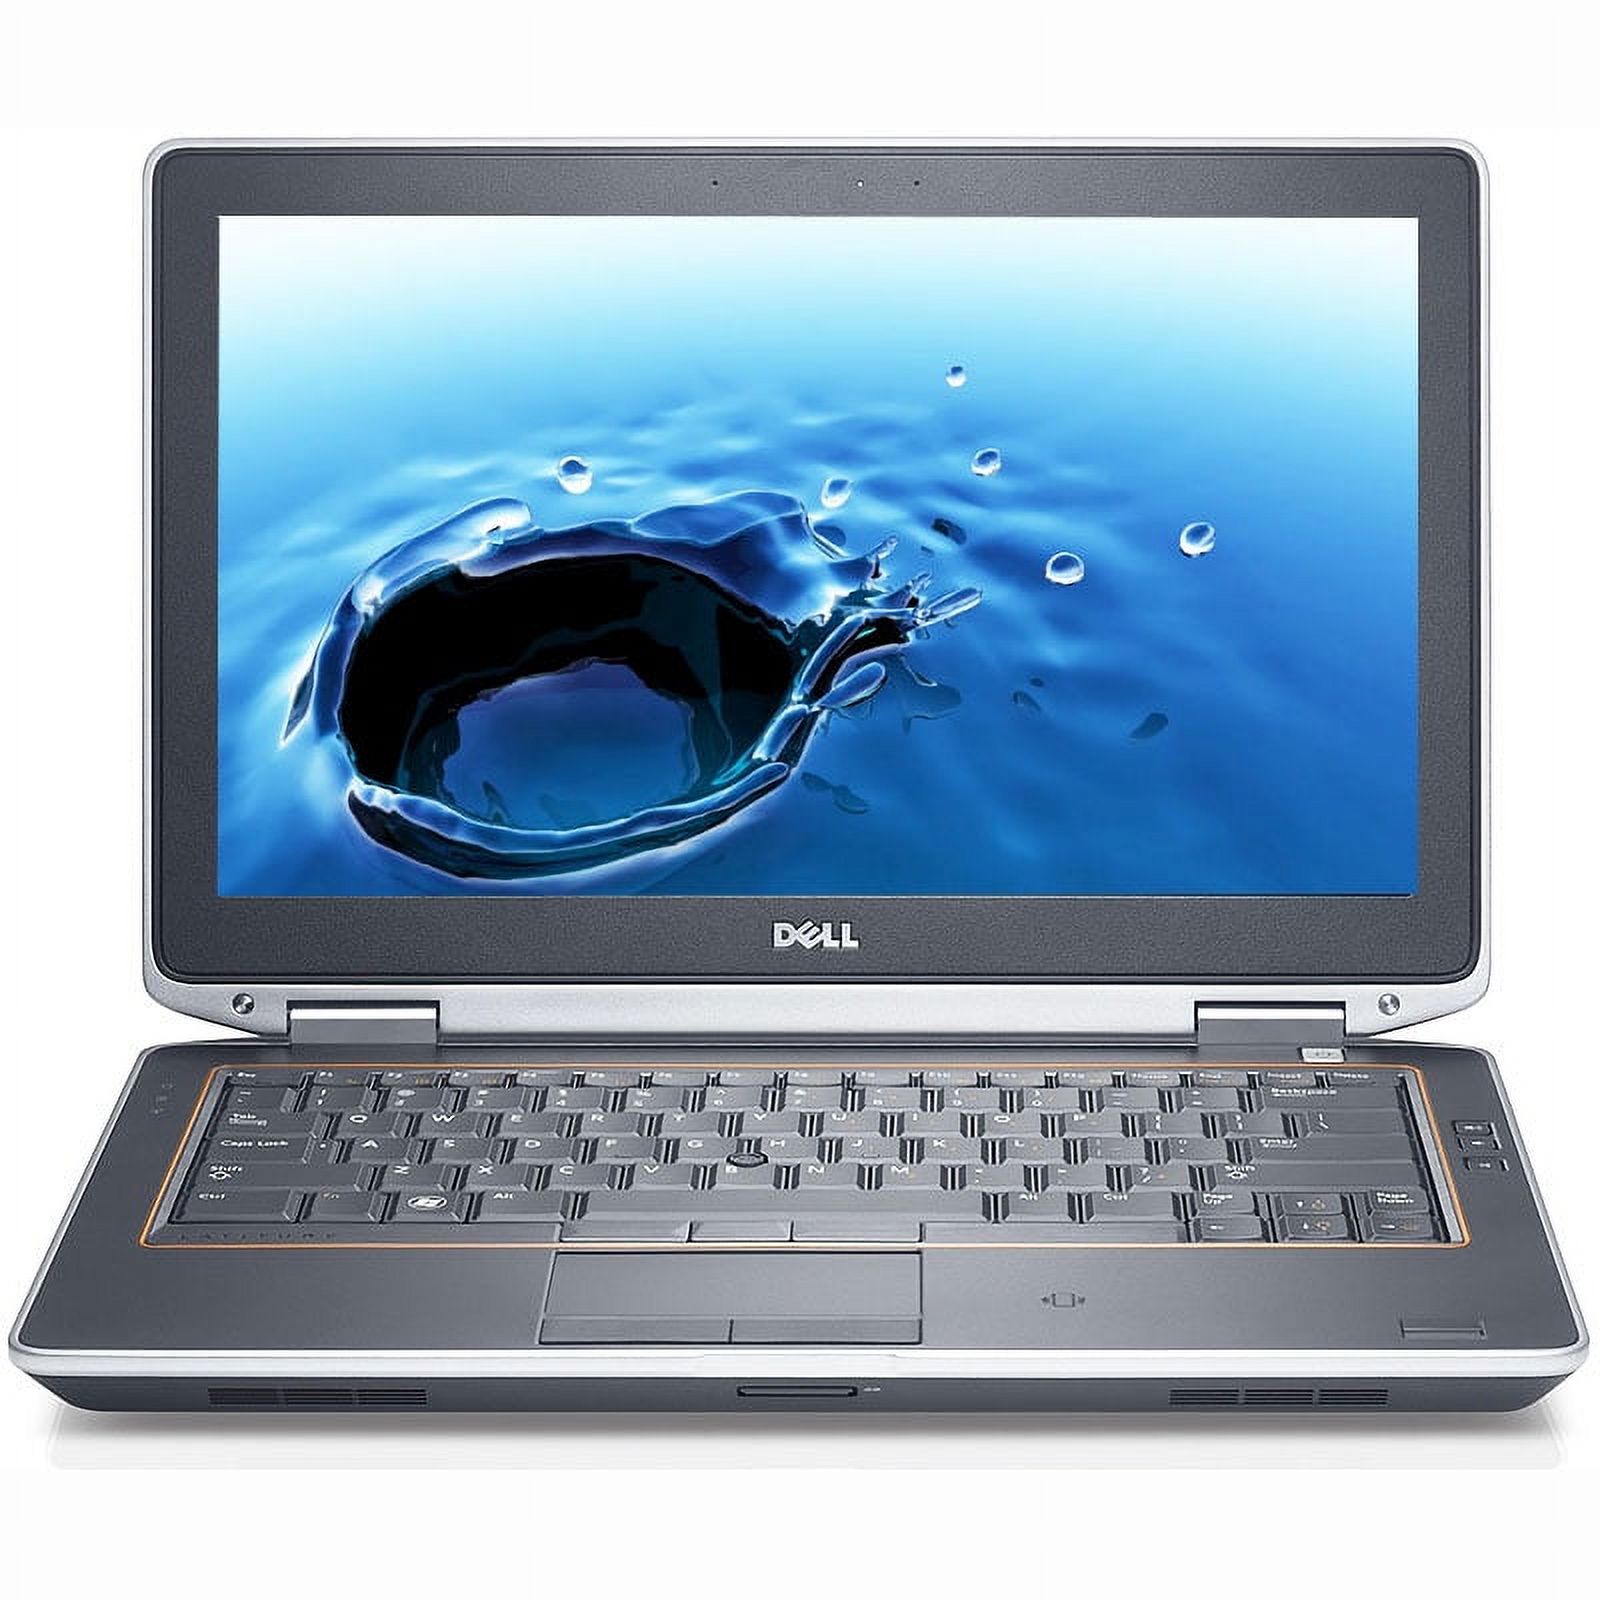 Used Dell Latitude E6320 i5 2.6GHz 4GB 320GB DVD Windows 10 Pro 64 Laptop B Camera - image 1 of 4